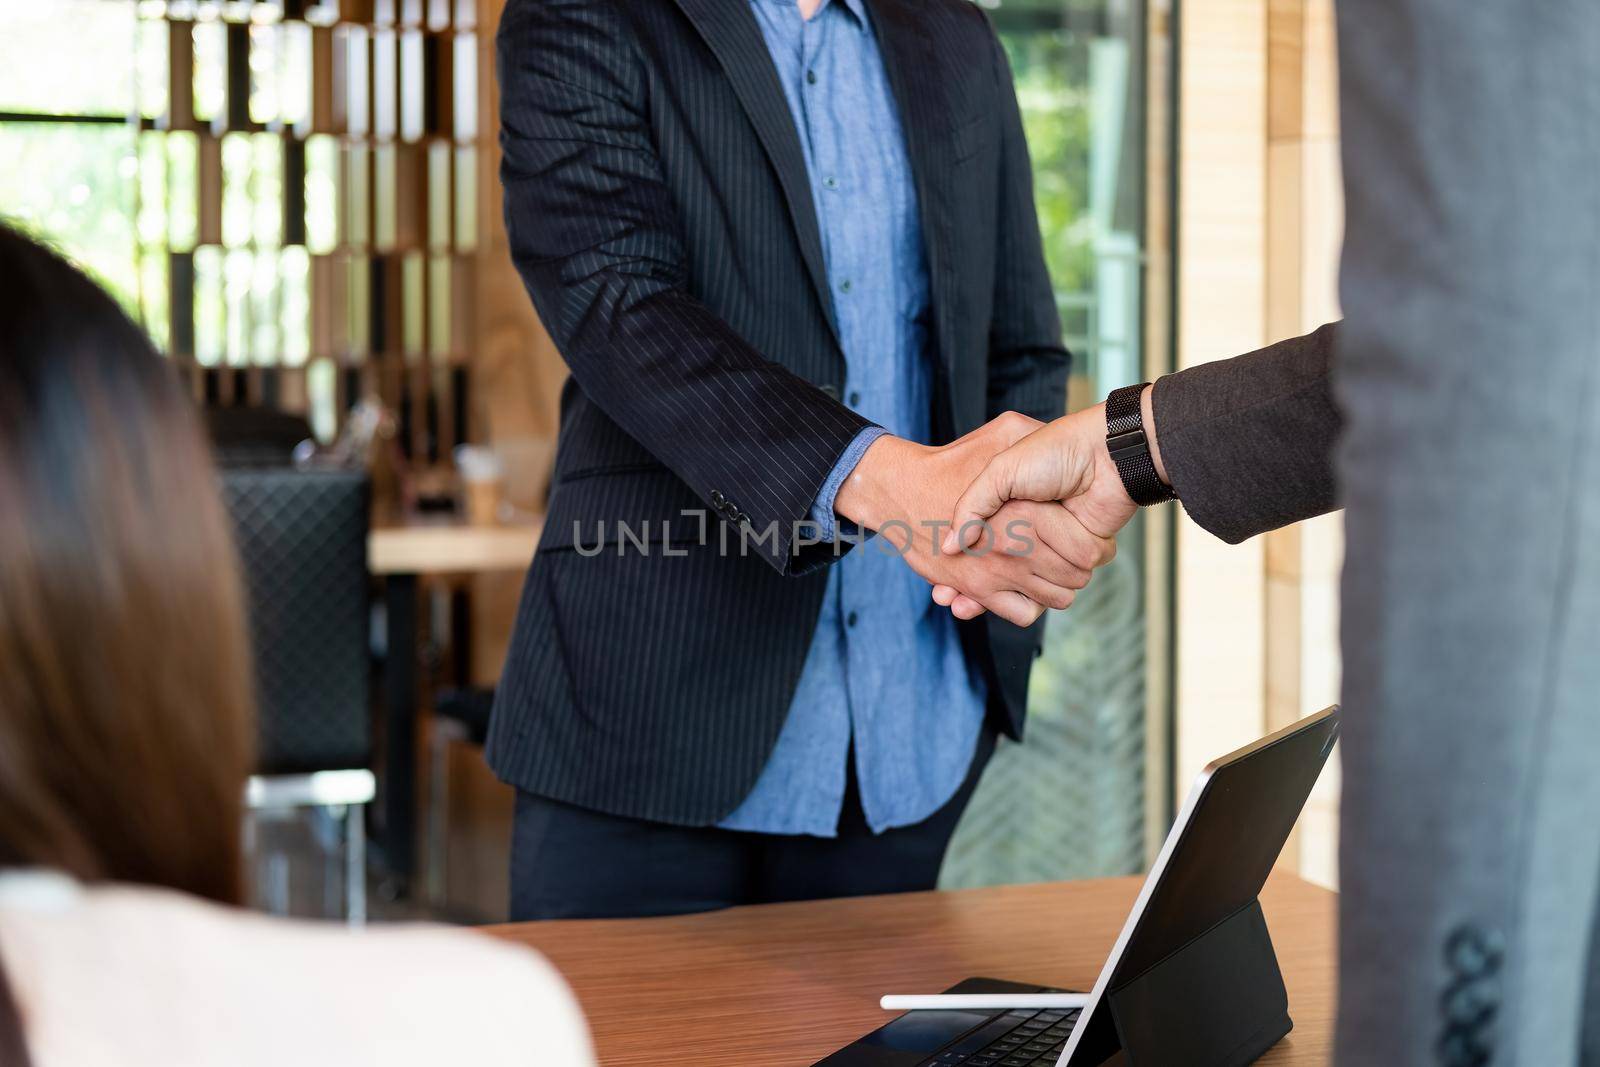 Business people shaking hands during meeting in meeting room by nateemee